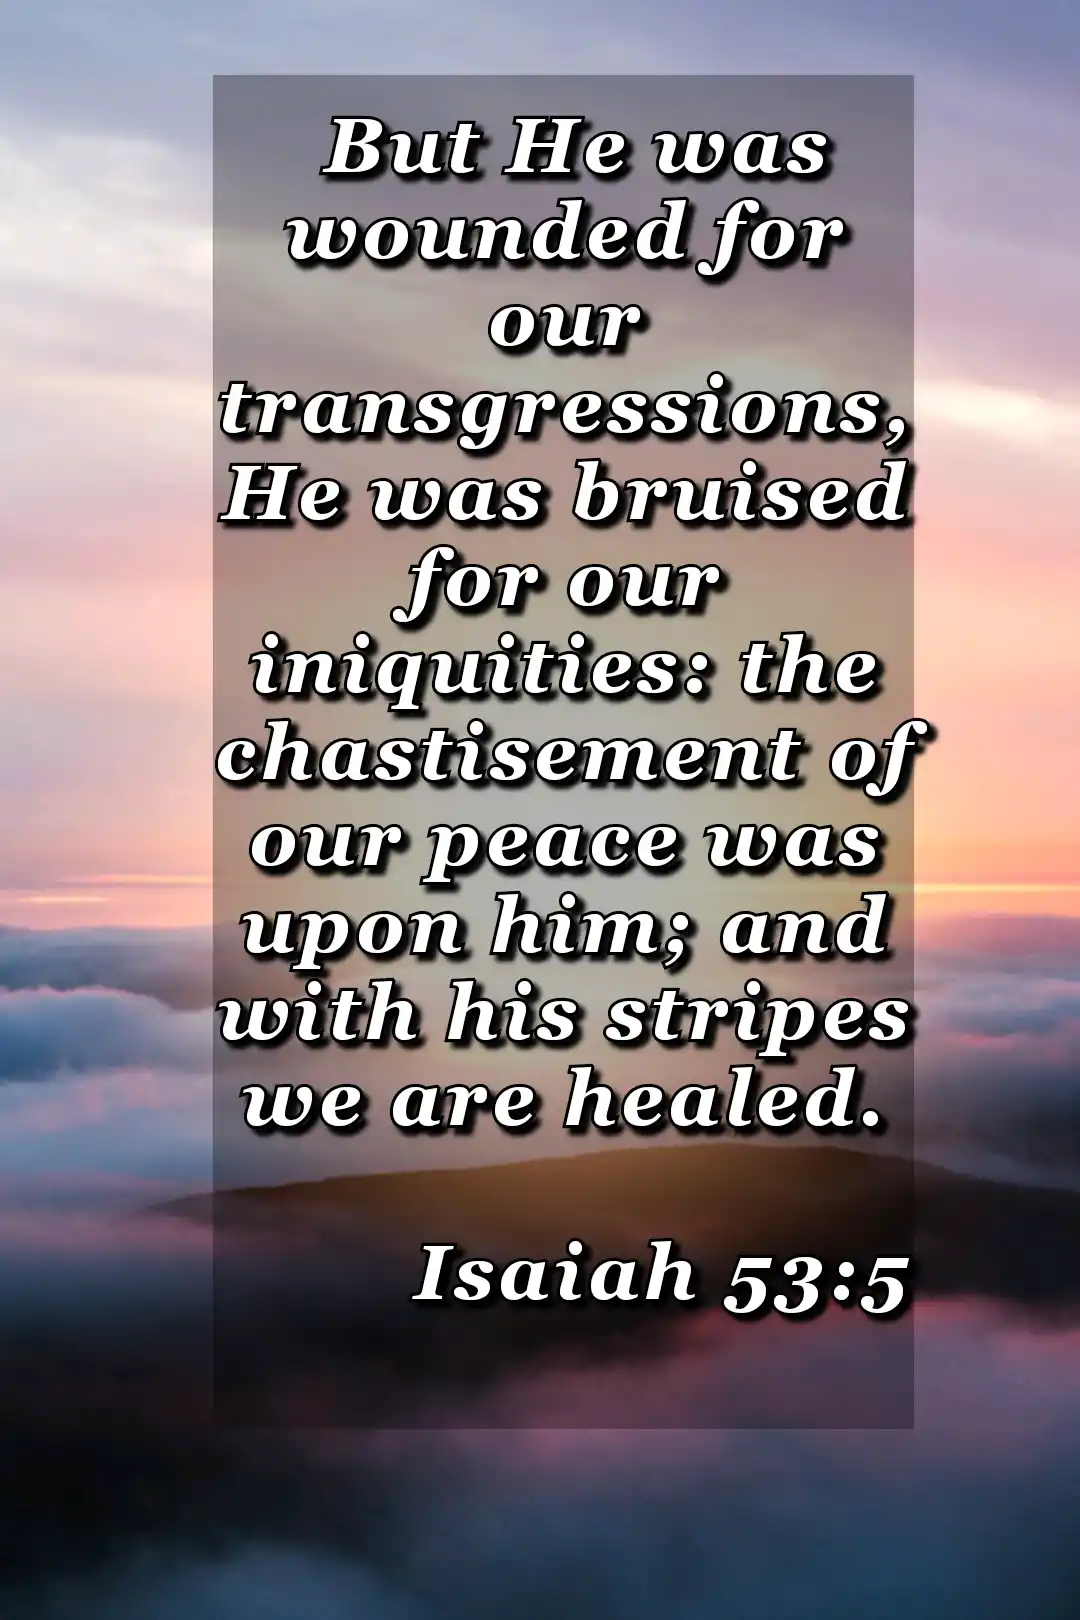 bible verses wallpaper about healing Isaiah 53:5)